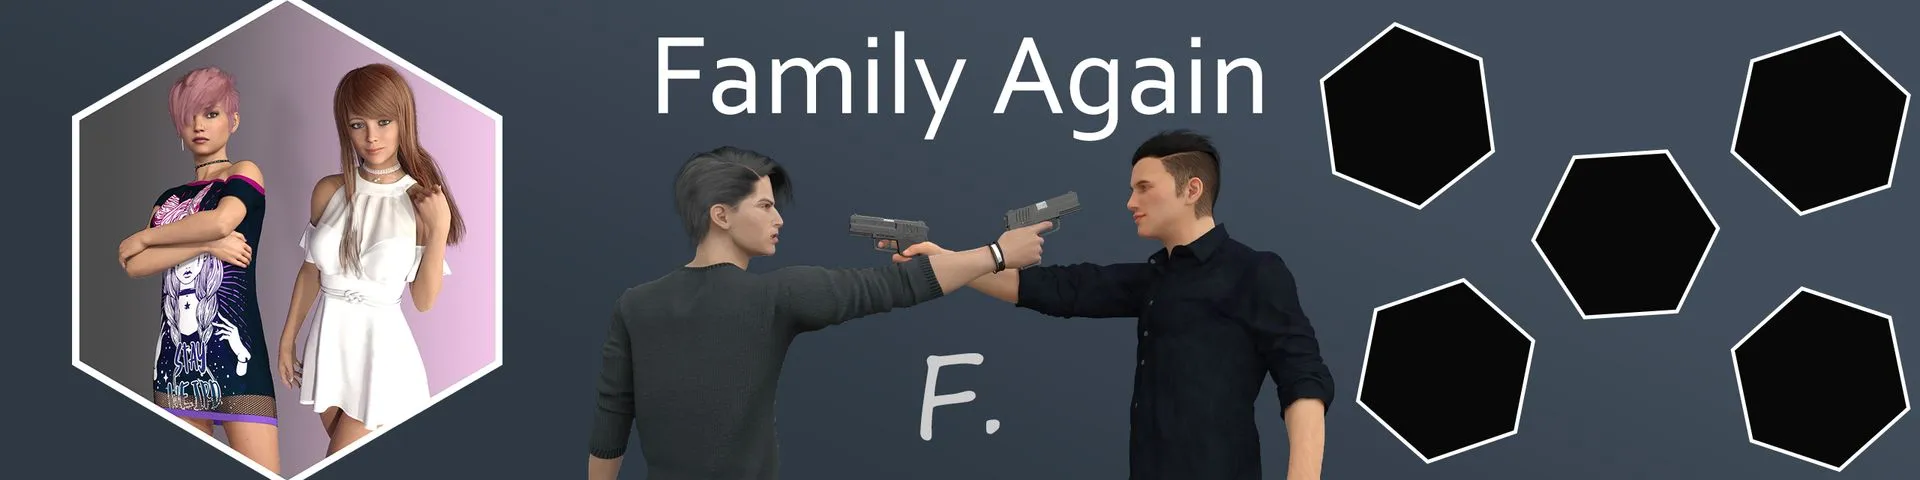 Family Again [v0.1.0] main image